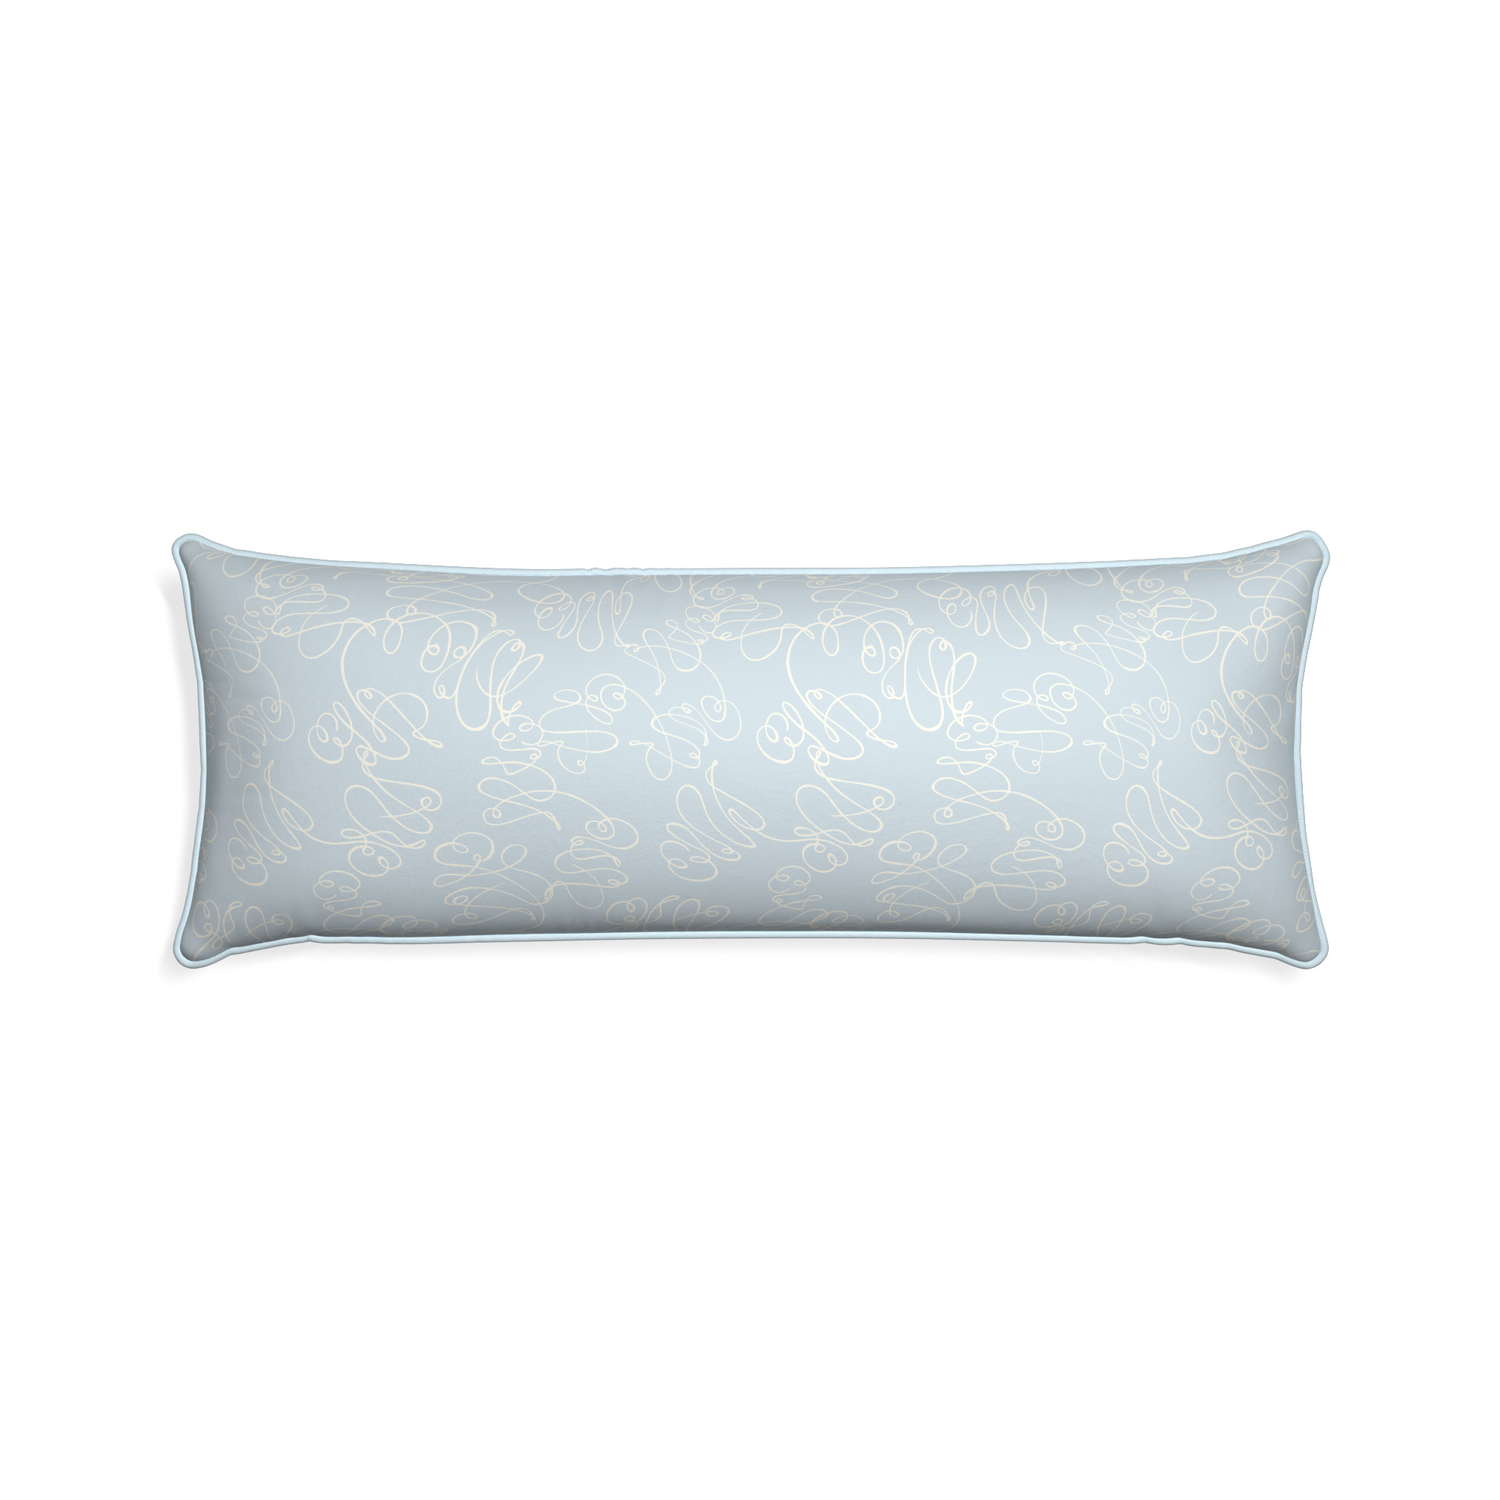 Xl-lumbar mirabella custom pillow with powder piping on white background